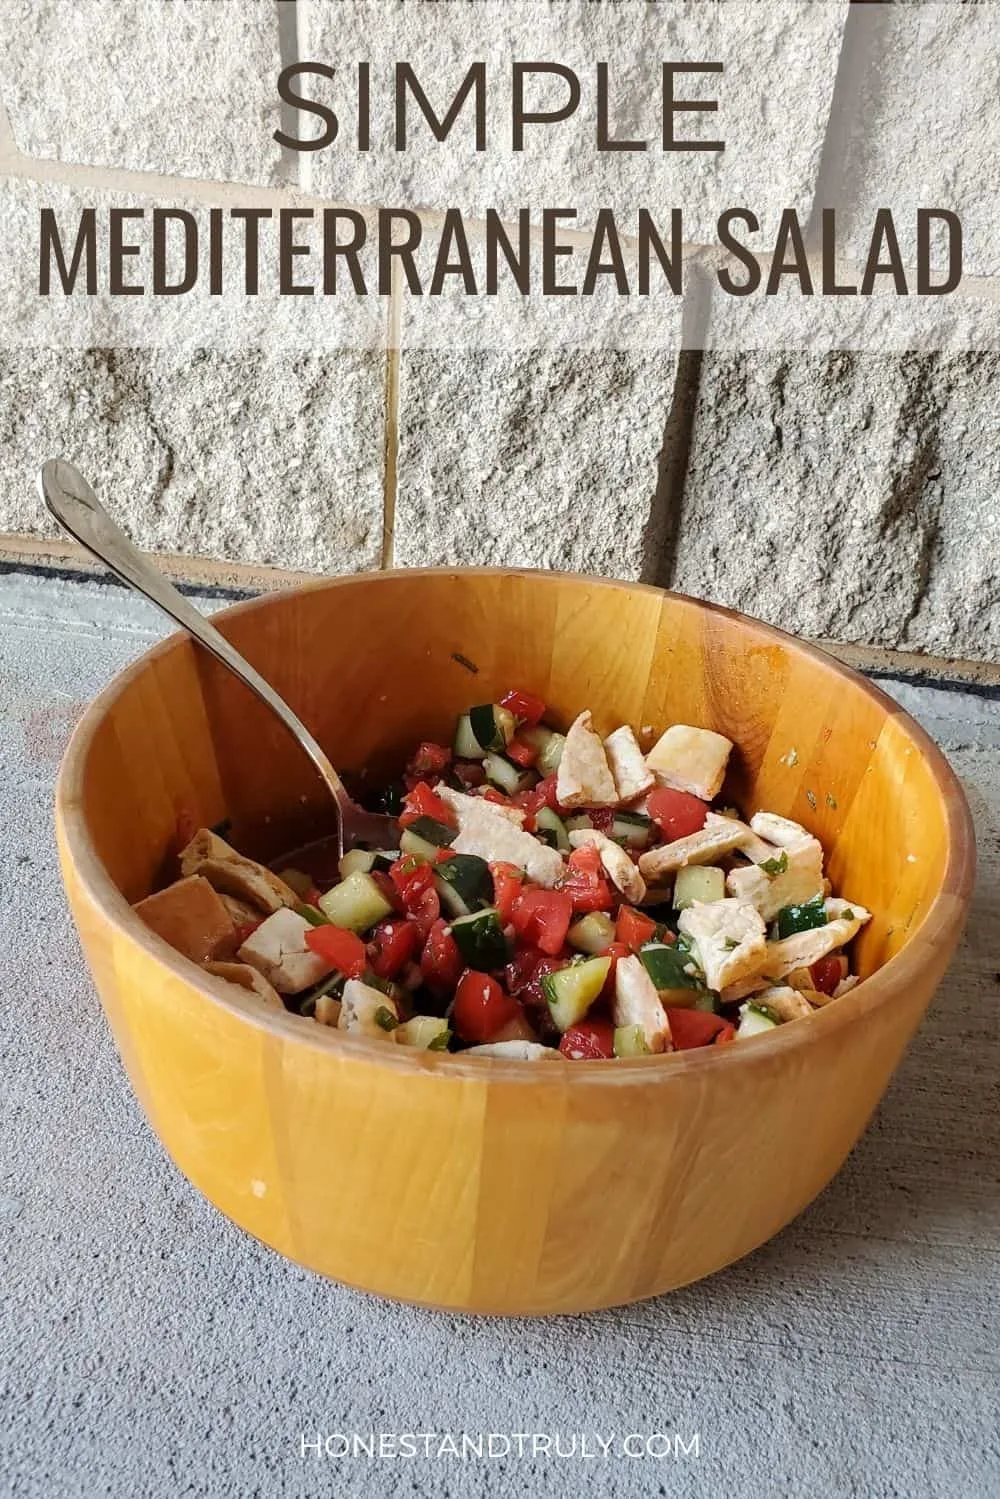 Mediterranean salad sitting near a concrete block wall with text simple Mediterranean salad.